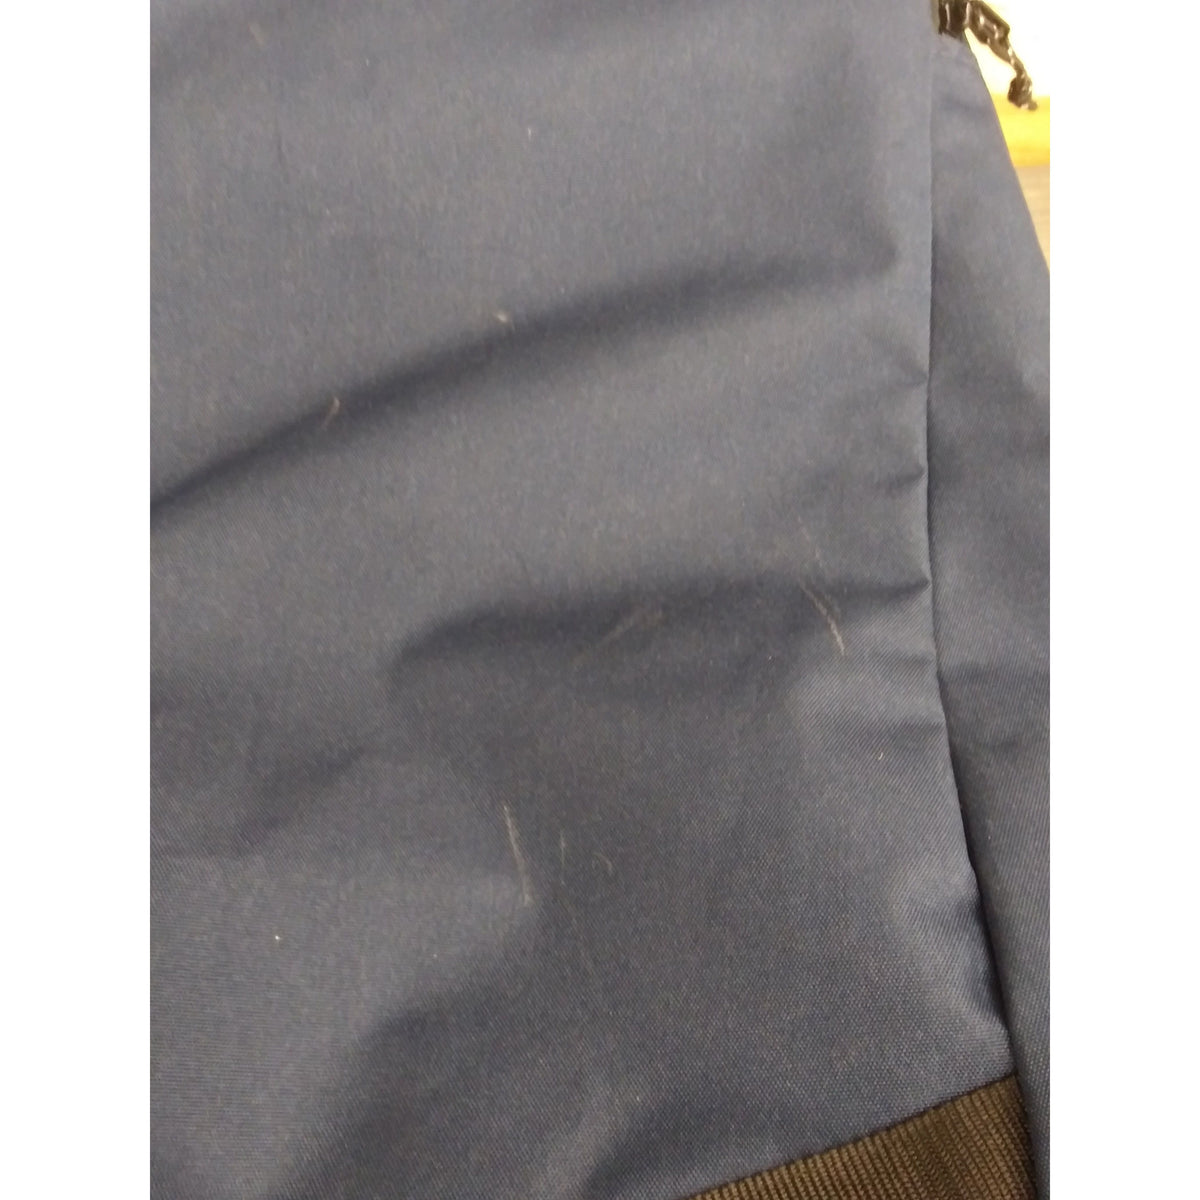 Burton Space Sack - Dress Blue - 181 - Used - Acceptable